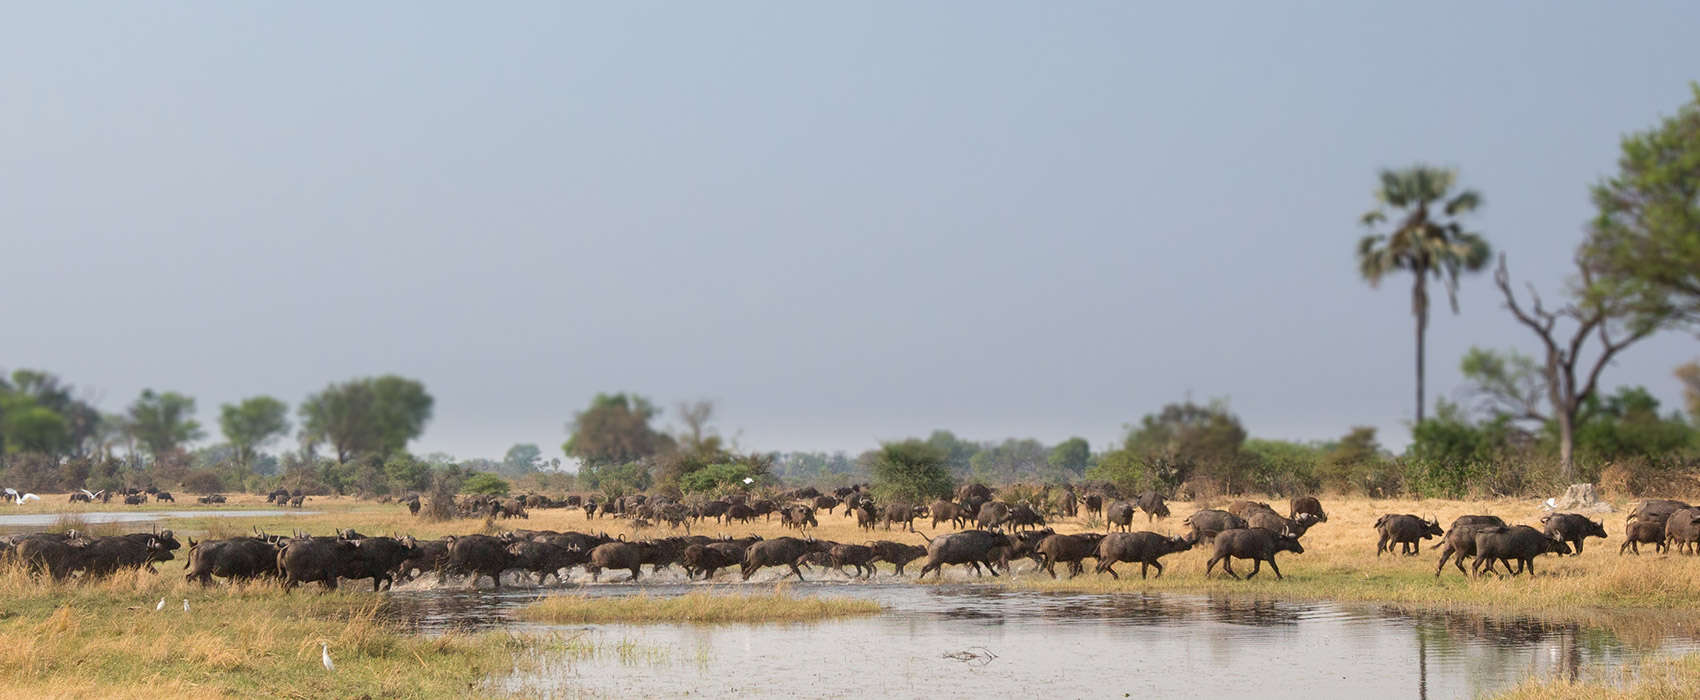 African Okavango Delta Safari animals